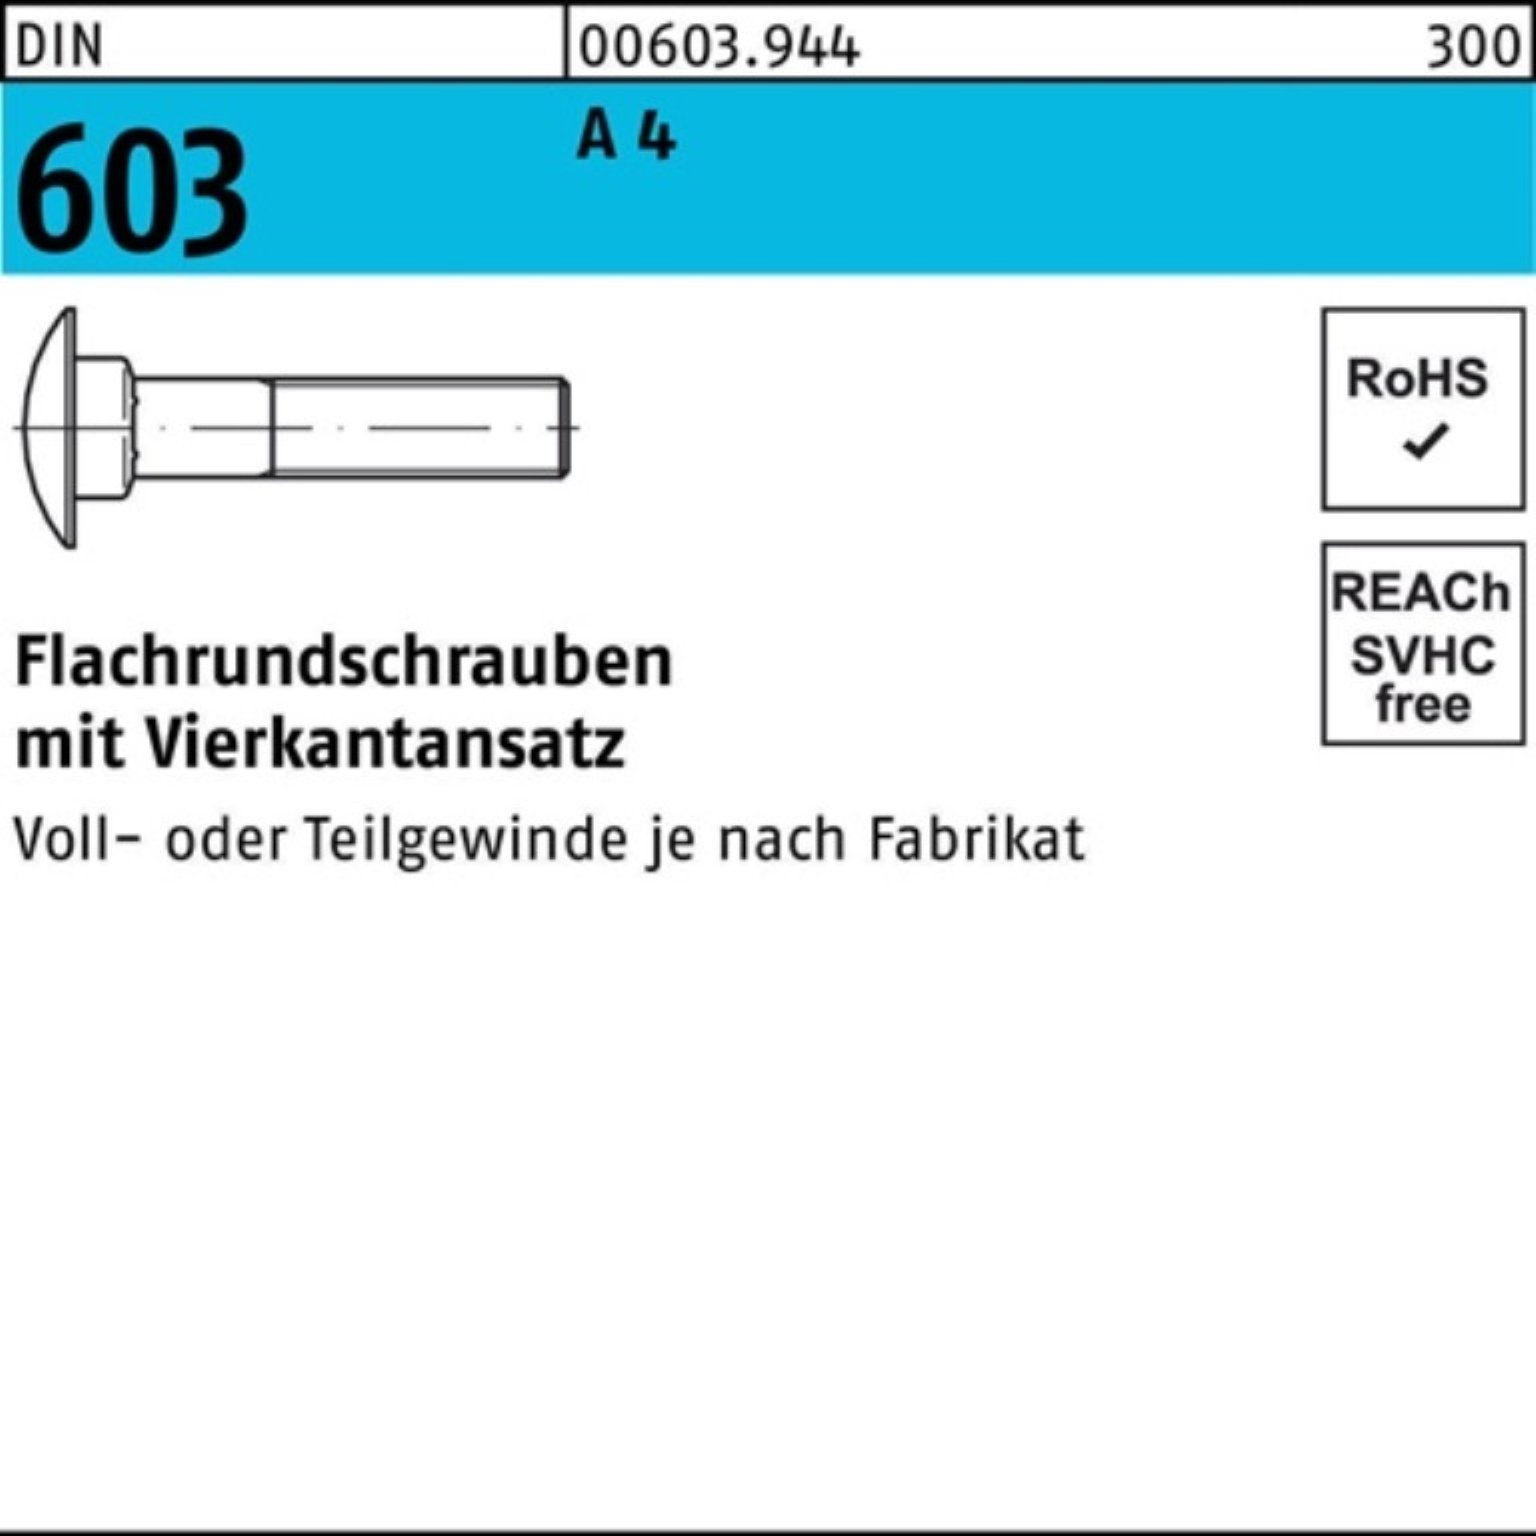 Reyher Schraube 100er Pack Flachrundschraube DIN 603 Vierkantansatz M16x 110 A 4 1 St